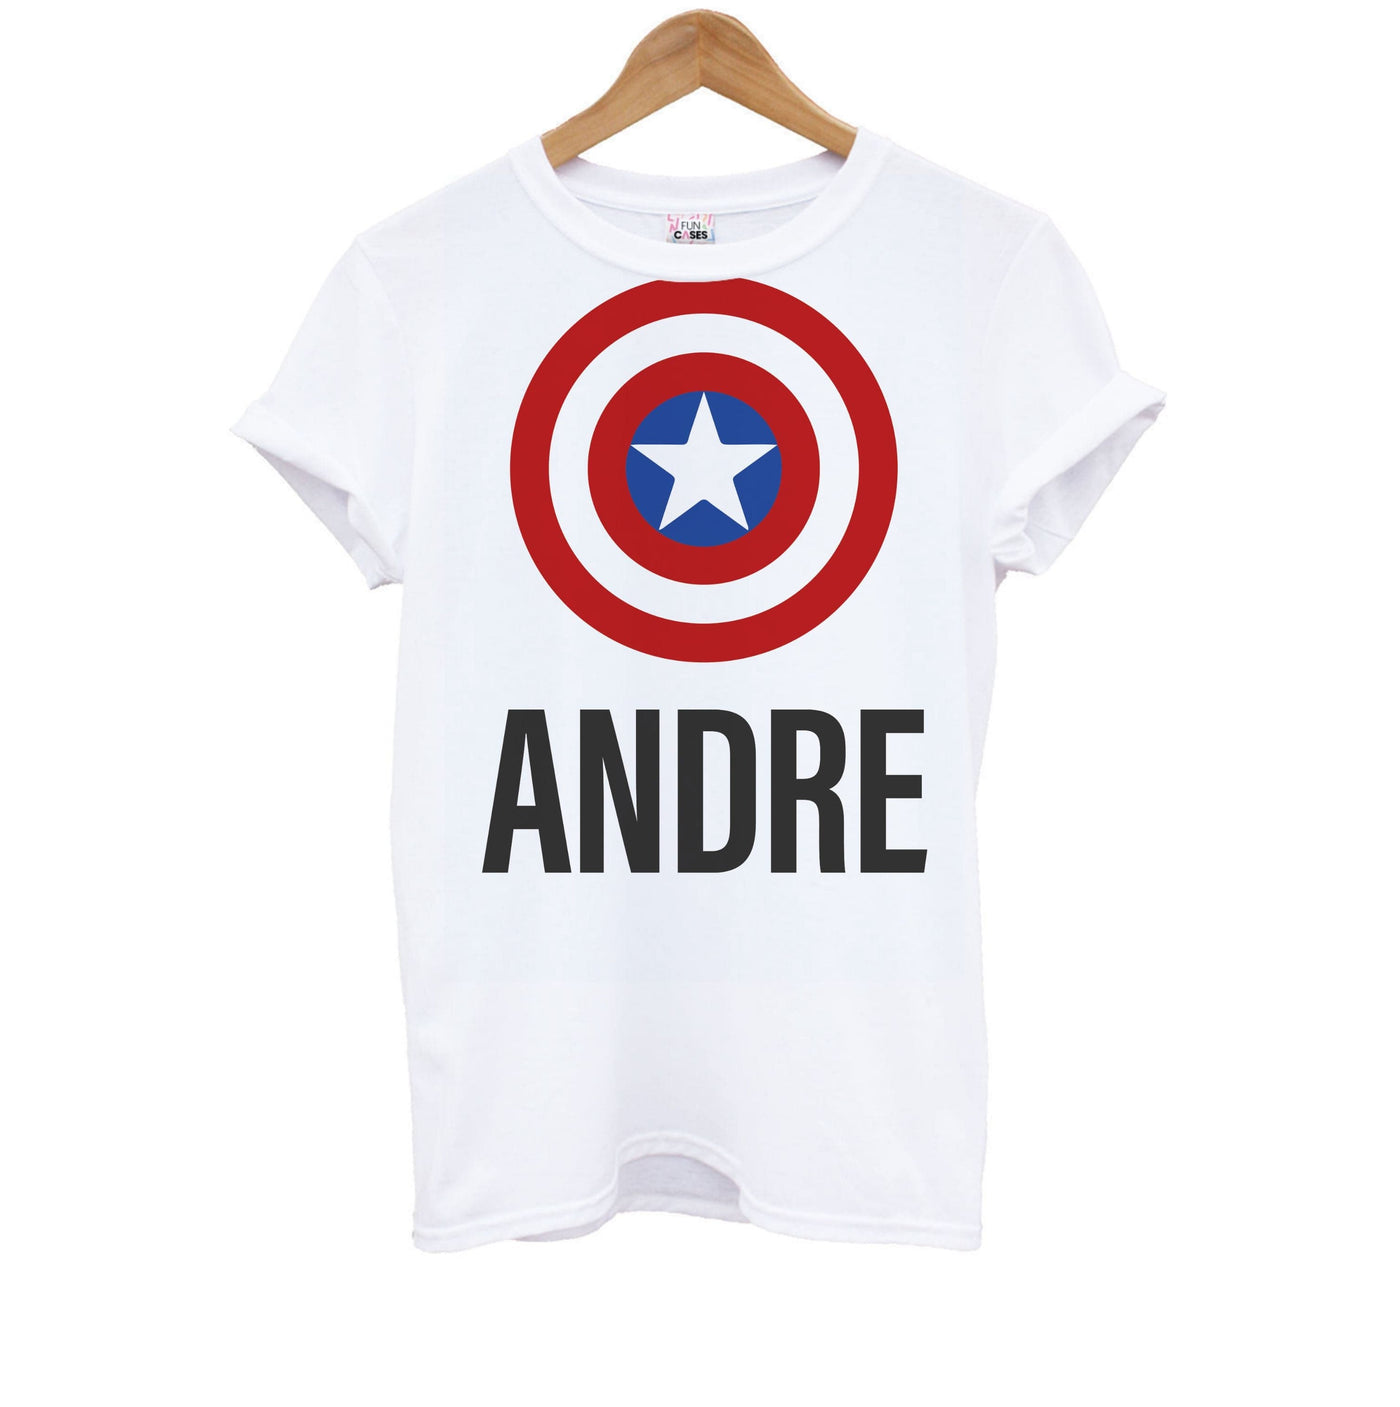 Captain America - Personalised Marvel Kids T-Shirt